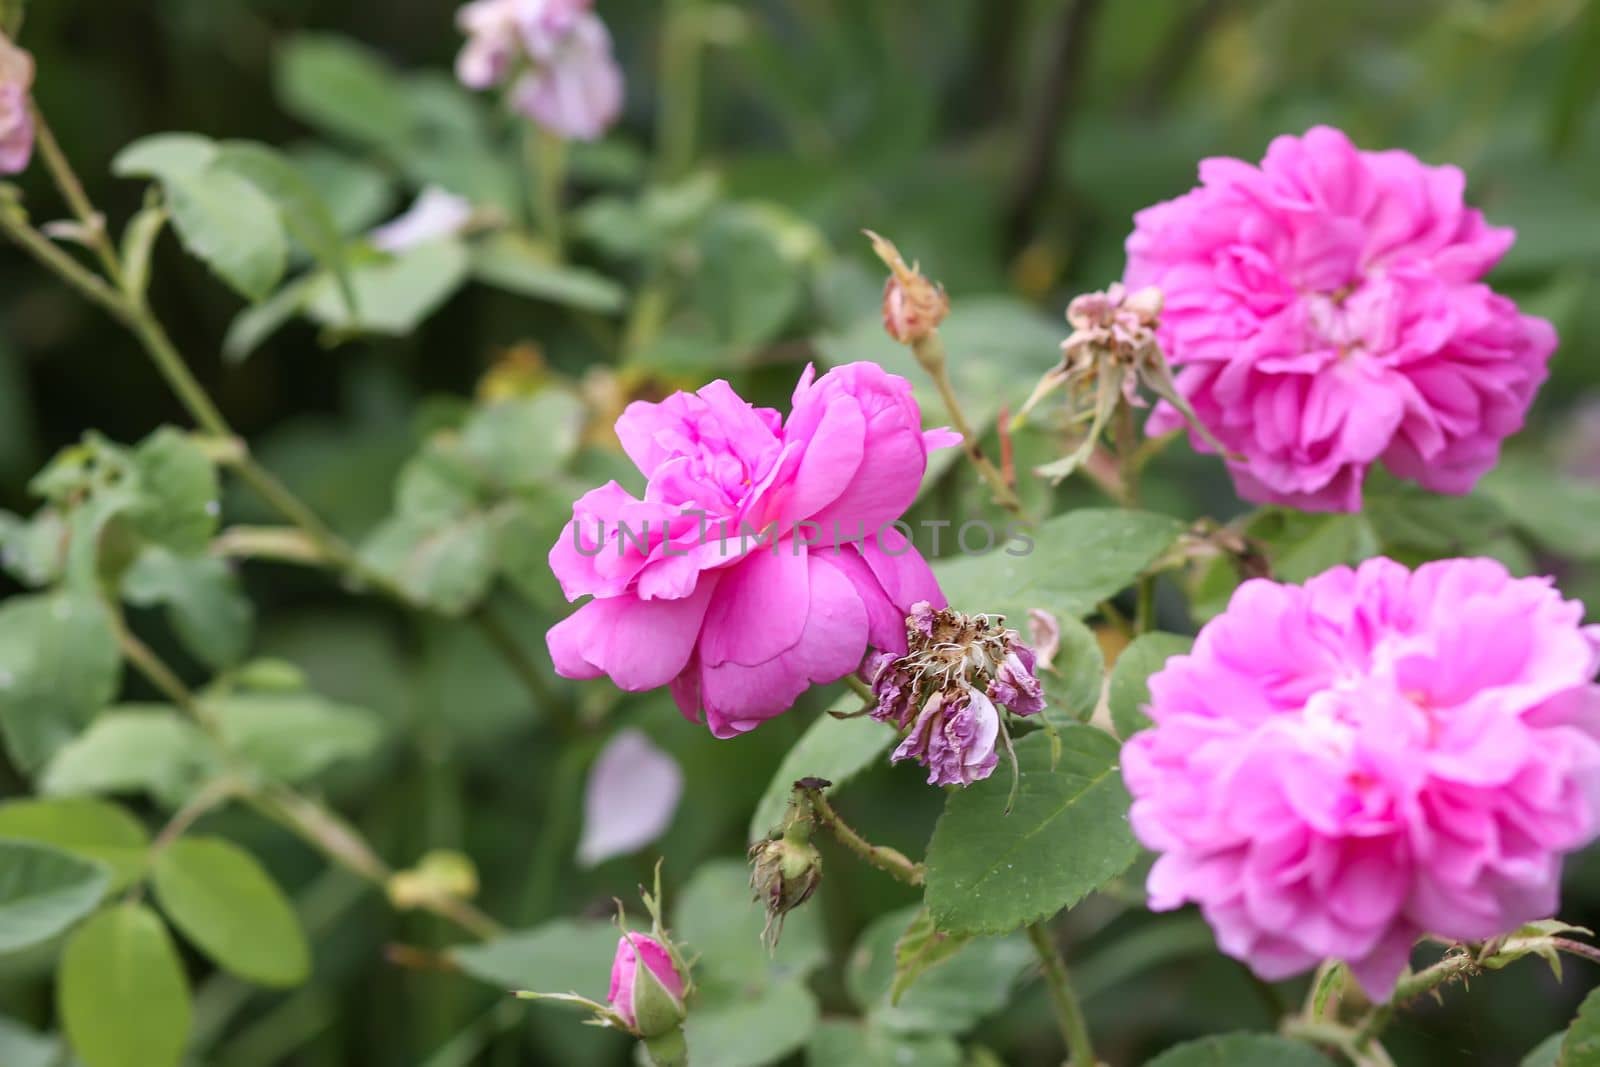 Pink roses. Garden flowers in bloom.